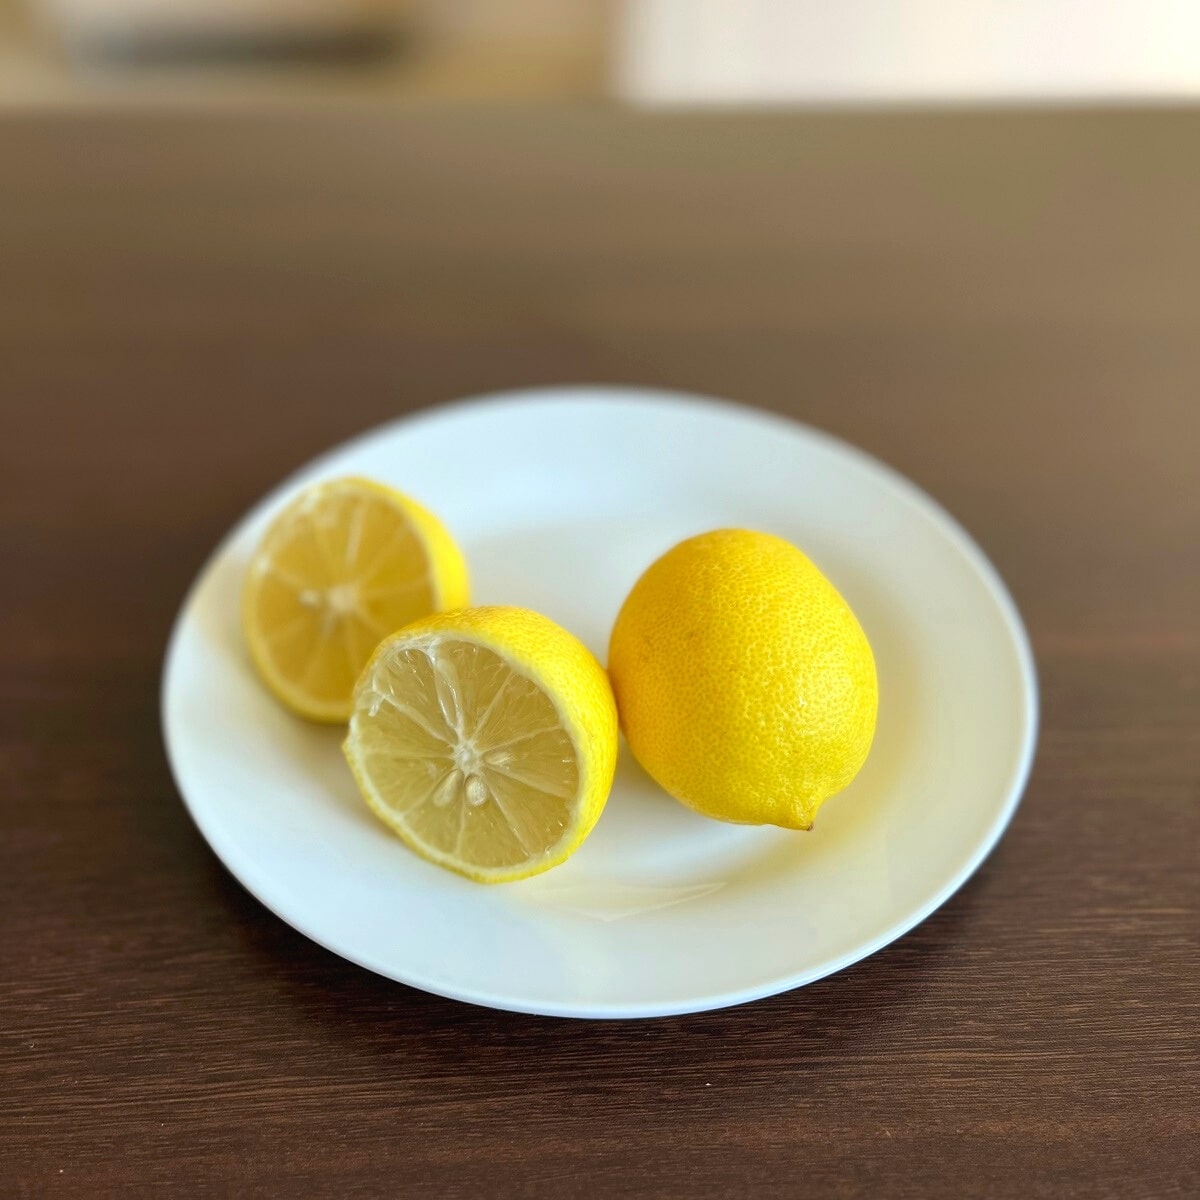 Lemons on plate